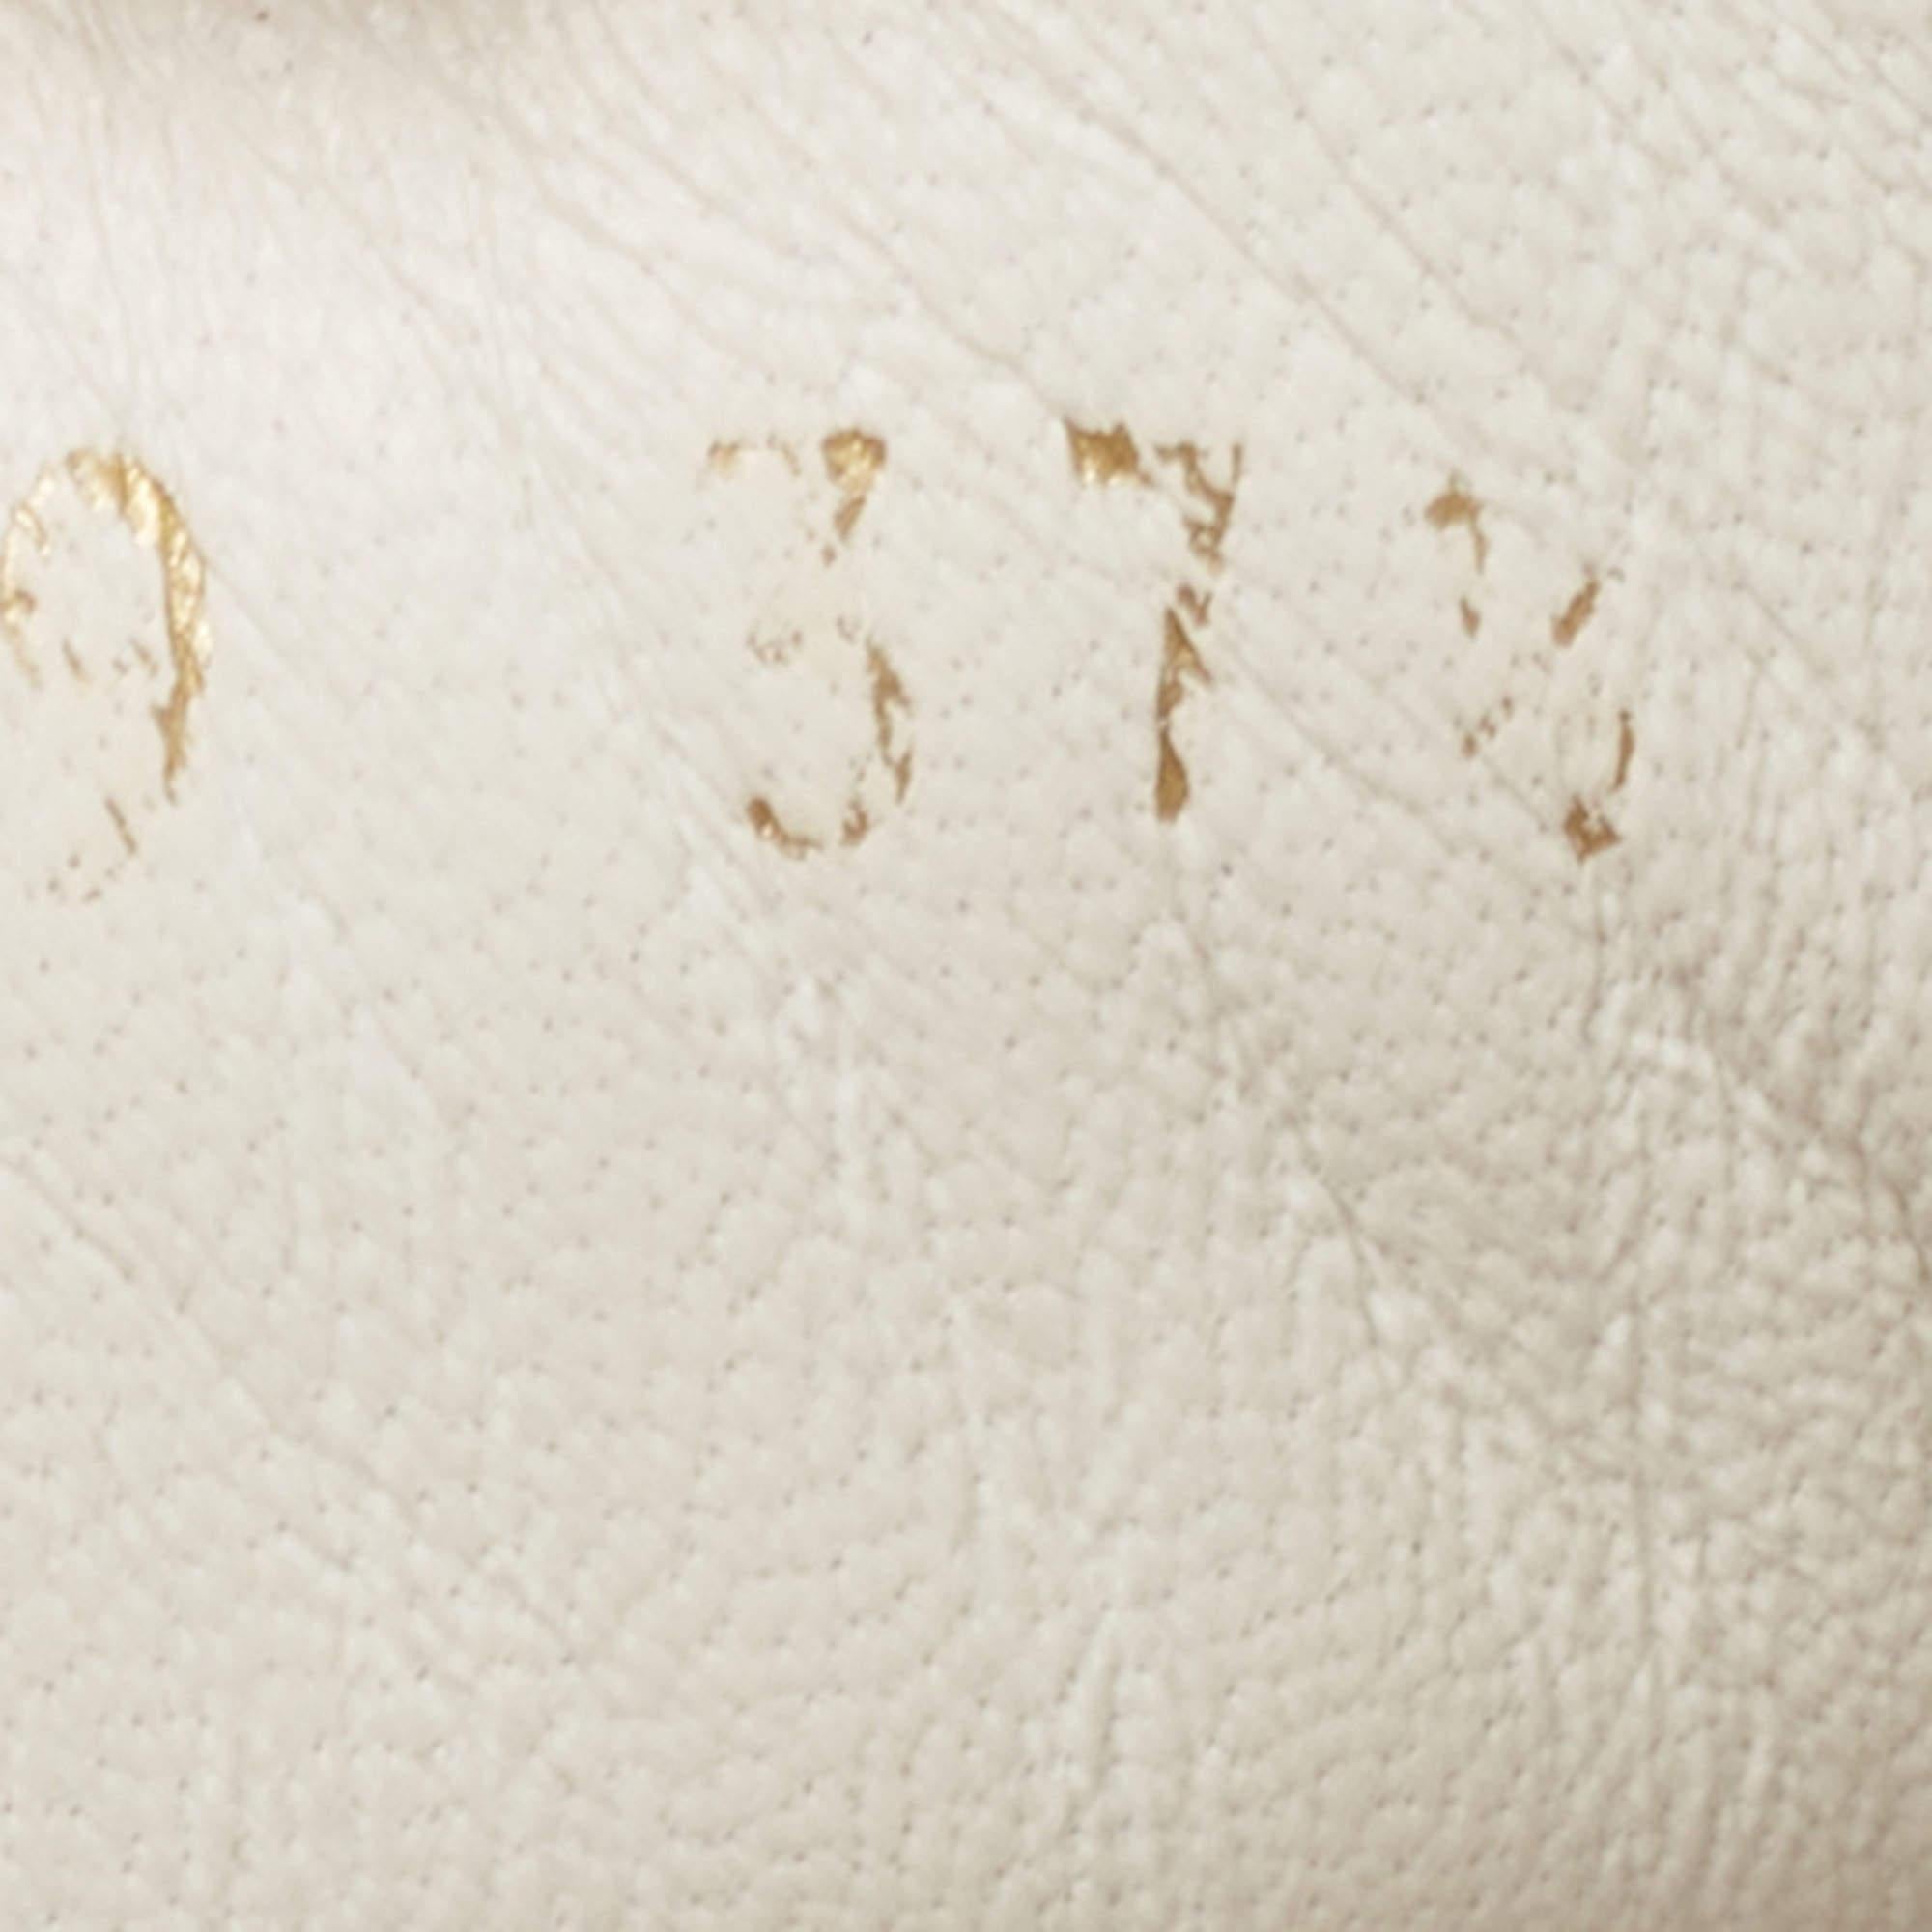 Women's Louis Vuitton White/Brown Leather Monogram Printed Frontrow Sneakers Size 37.5